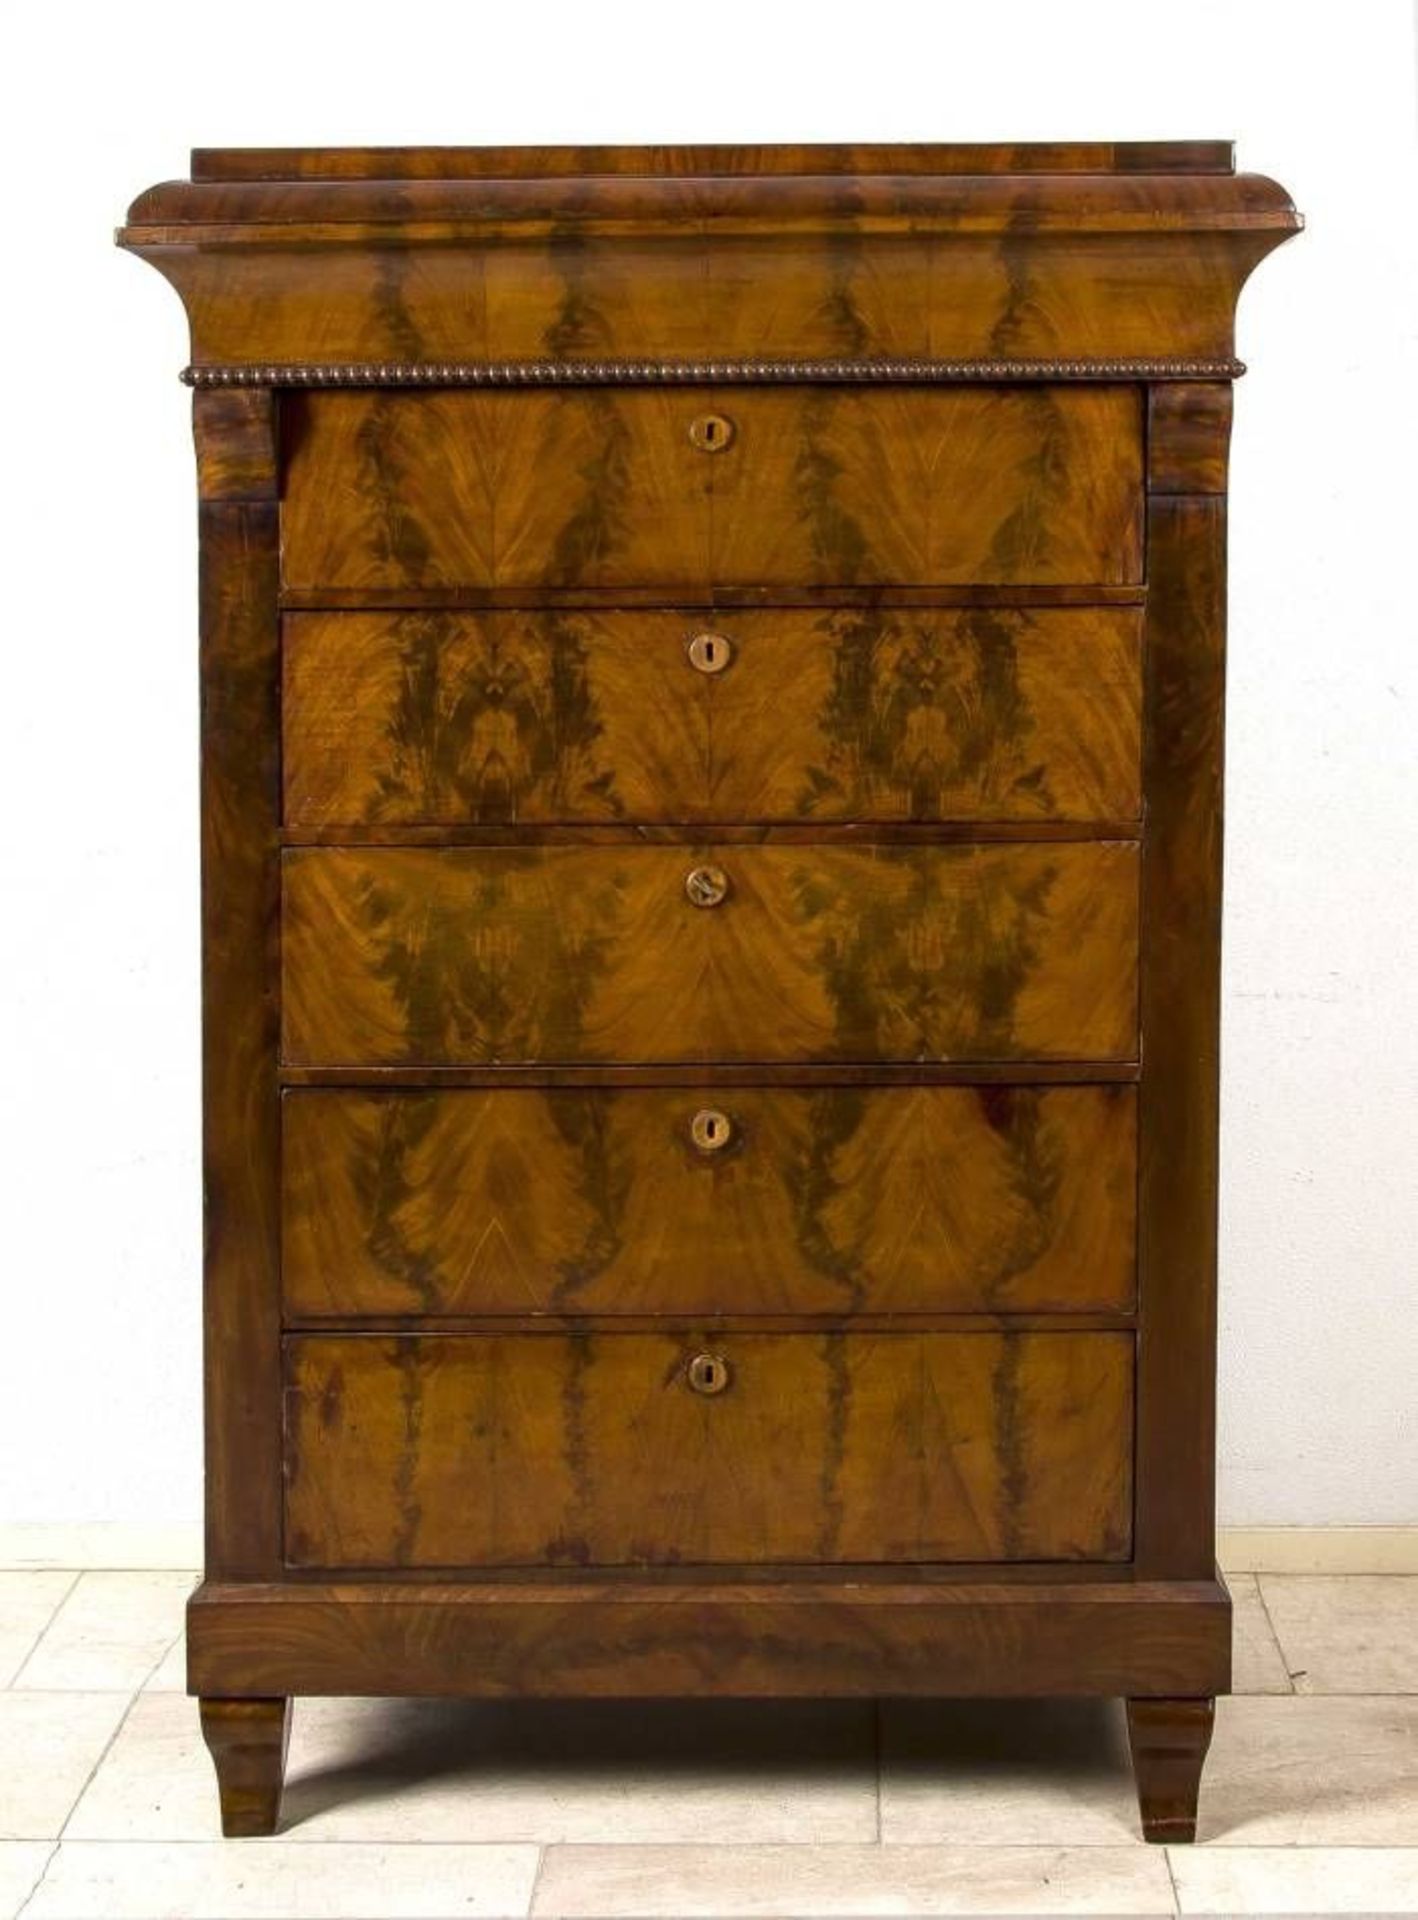 Beautiful 19th century mahogany veneer chiffoniere with 6 drawers (mahogany on oak) 170x110x51cm.